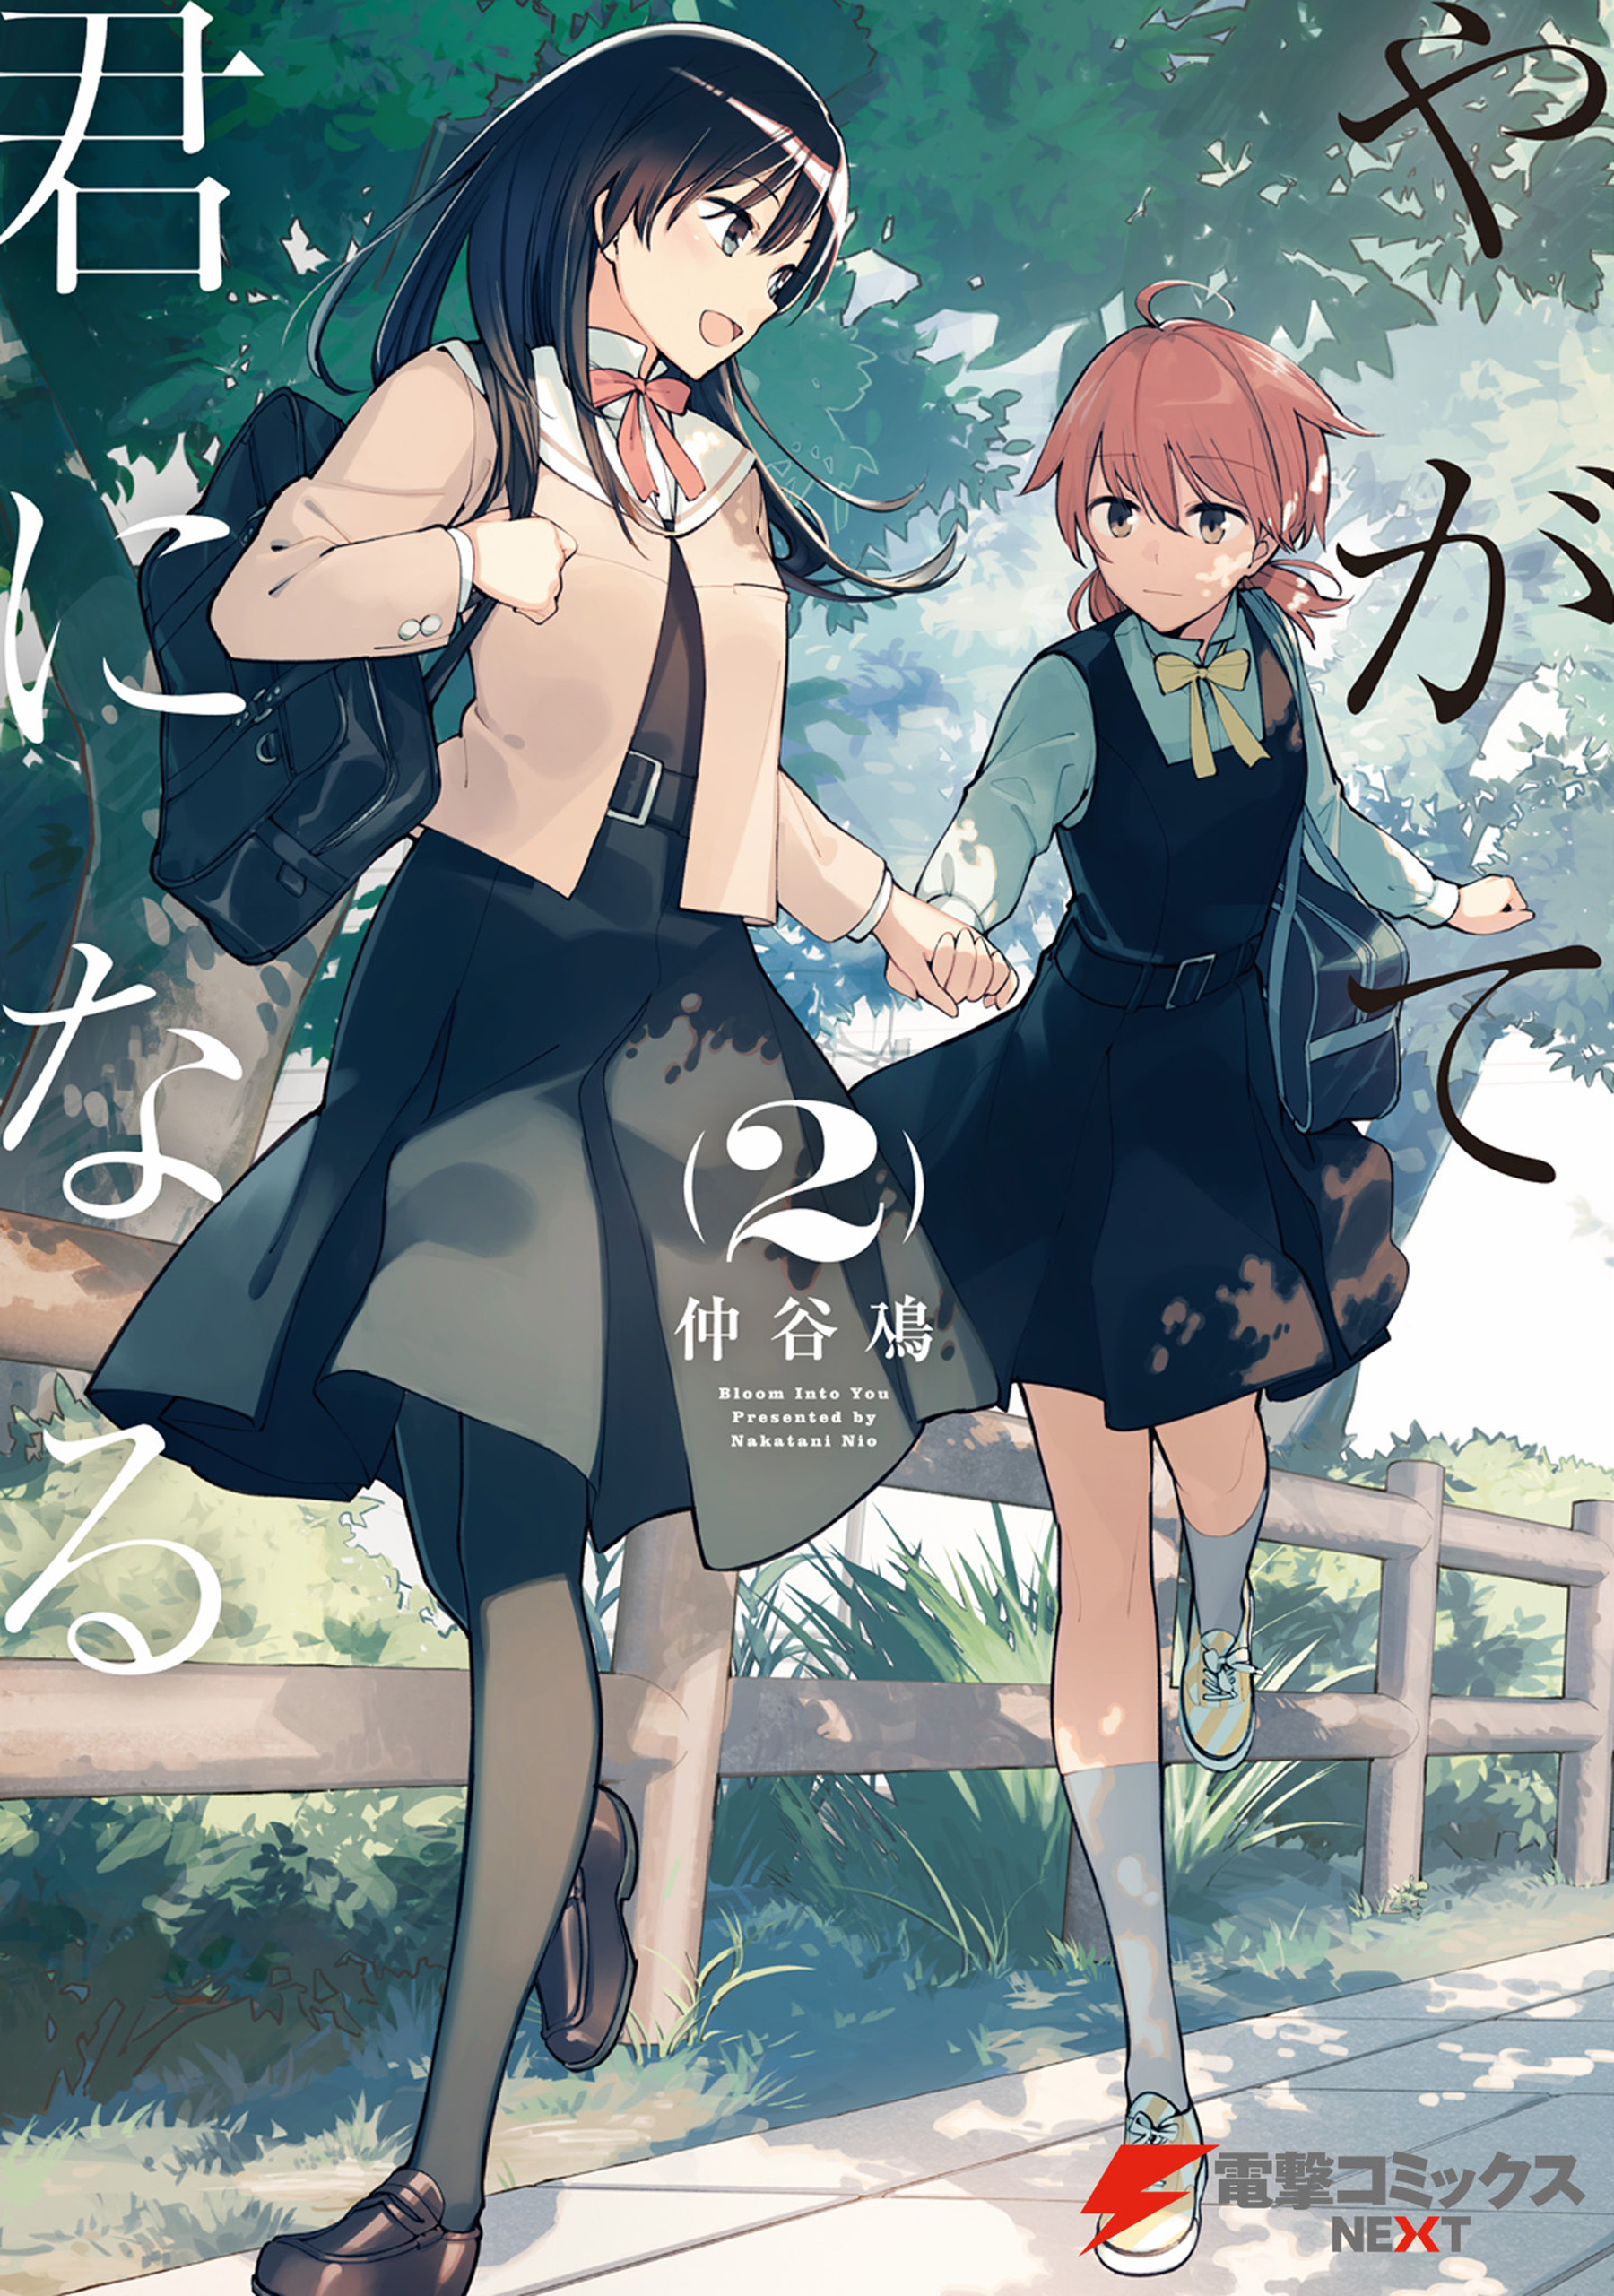 Yagate Kimi ni Naru: Bloom Into You manga Volume 2 - Minitokyo